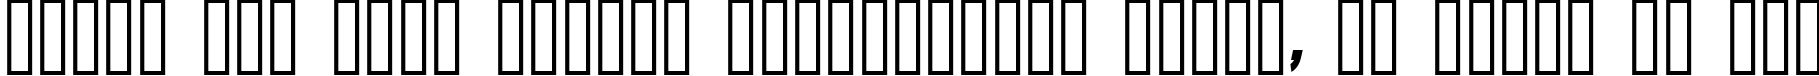 Пример написания шрифтом Knuckle Sandwich Italic текста на русском